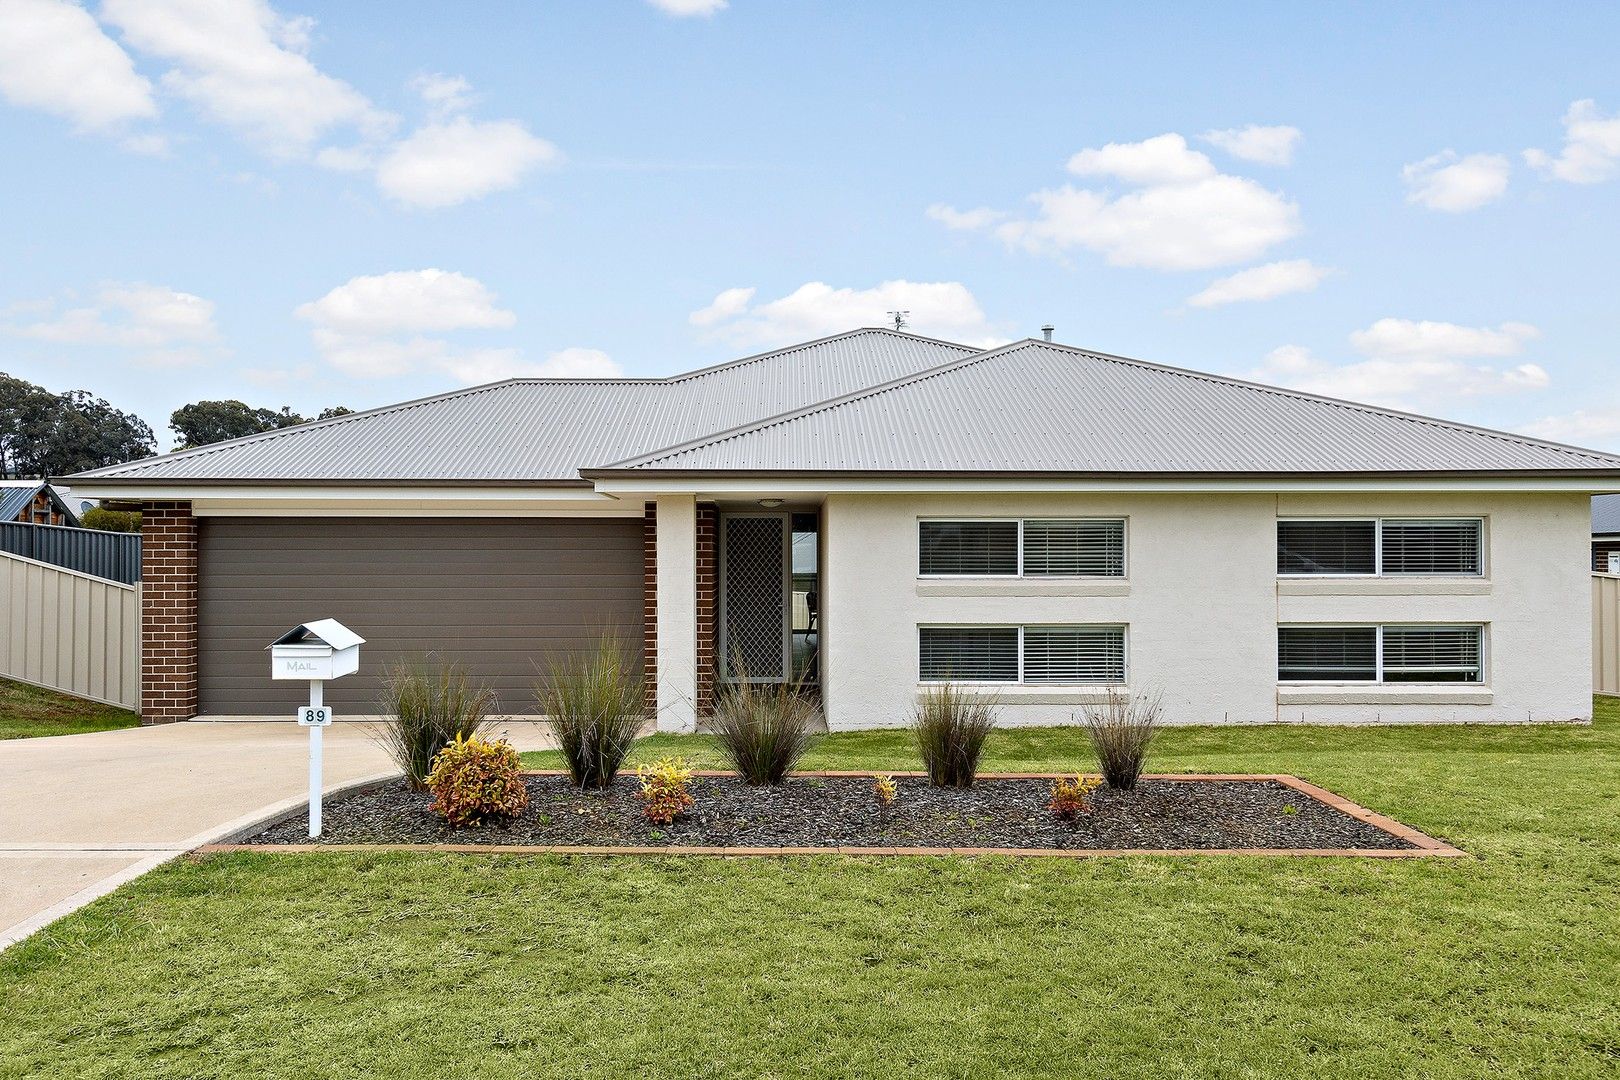 4 bedrooms House in 89 William Maker Drive ORANGE NSW, 2800